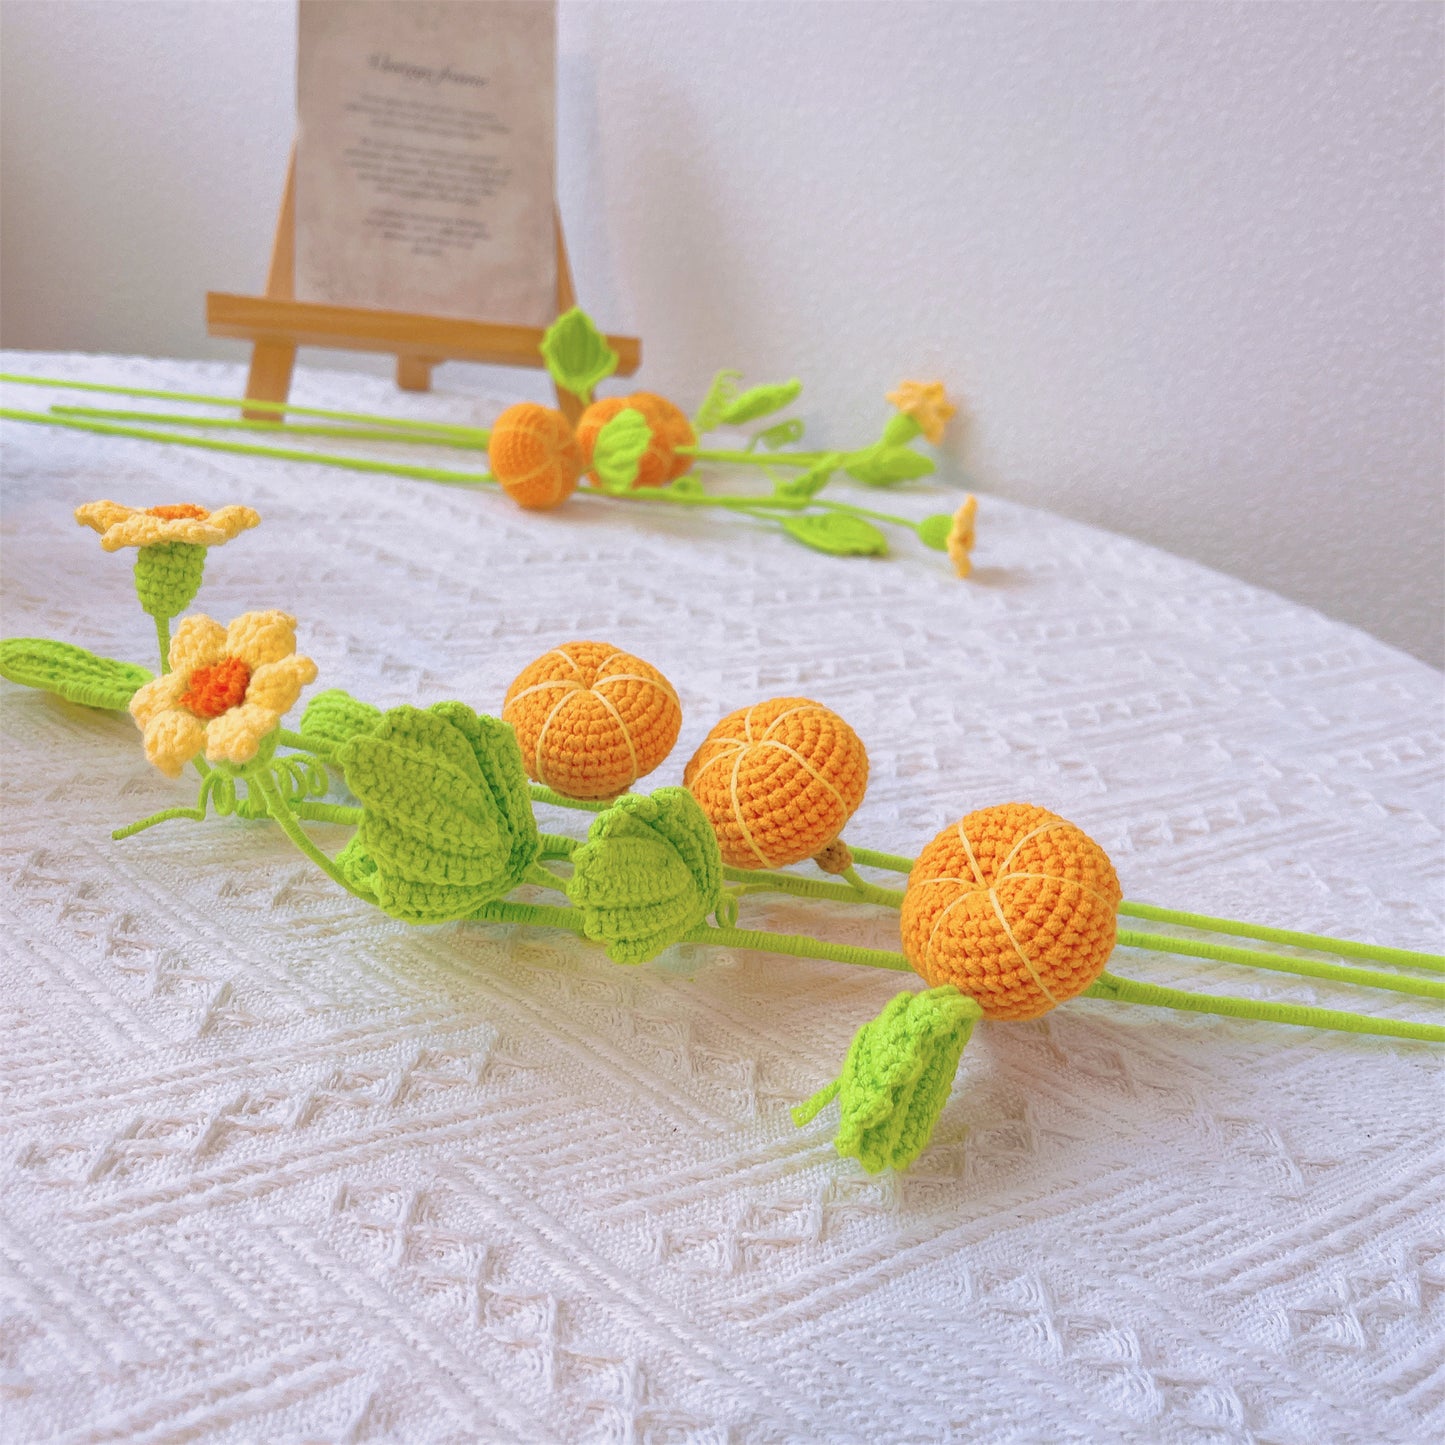 Harvest Time Fun: Handcrafted Crochet Pumpkin Stake for a Festive Garden Decor